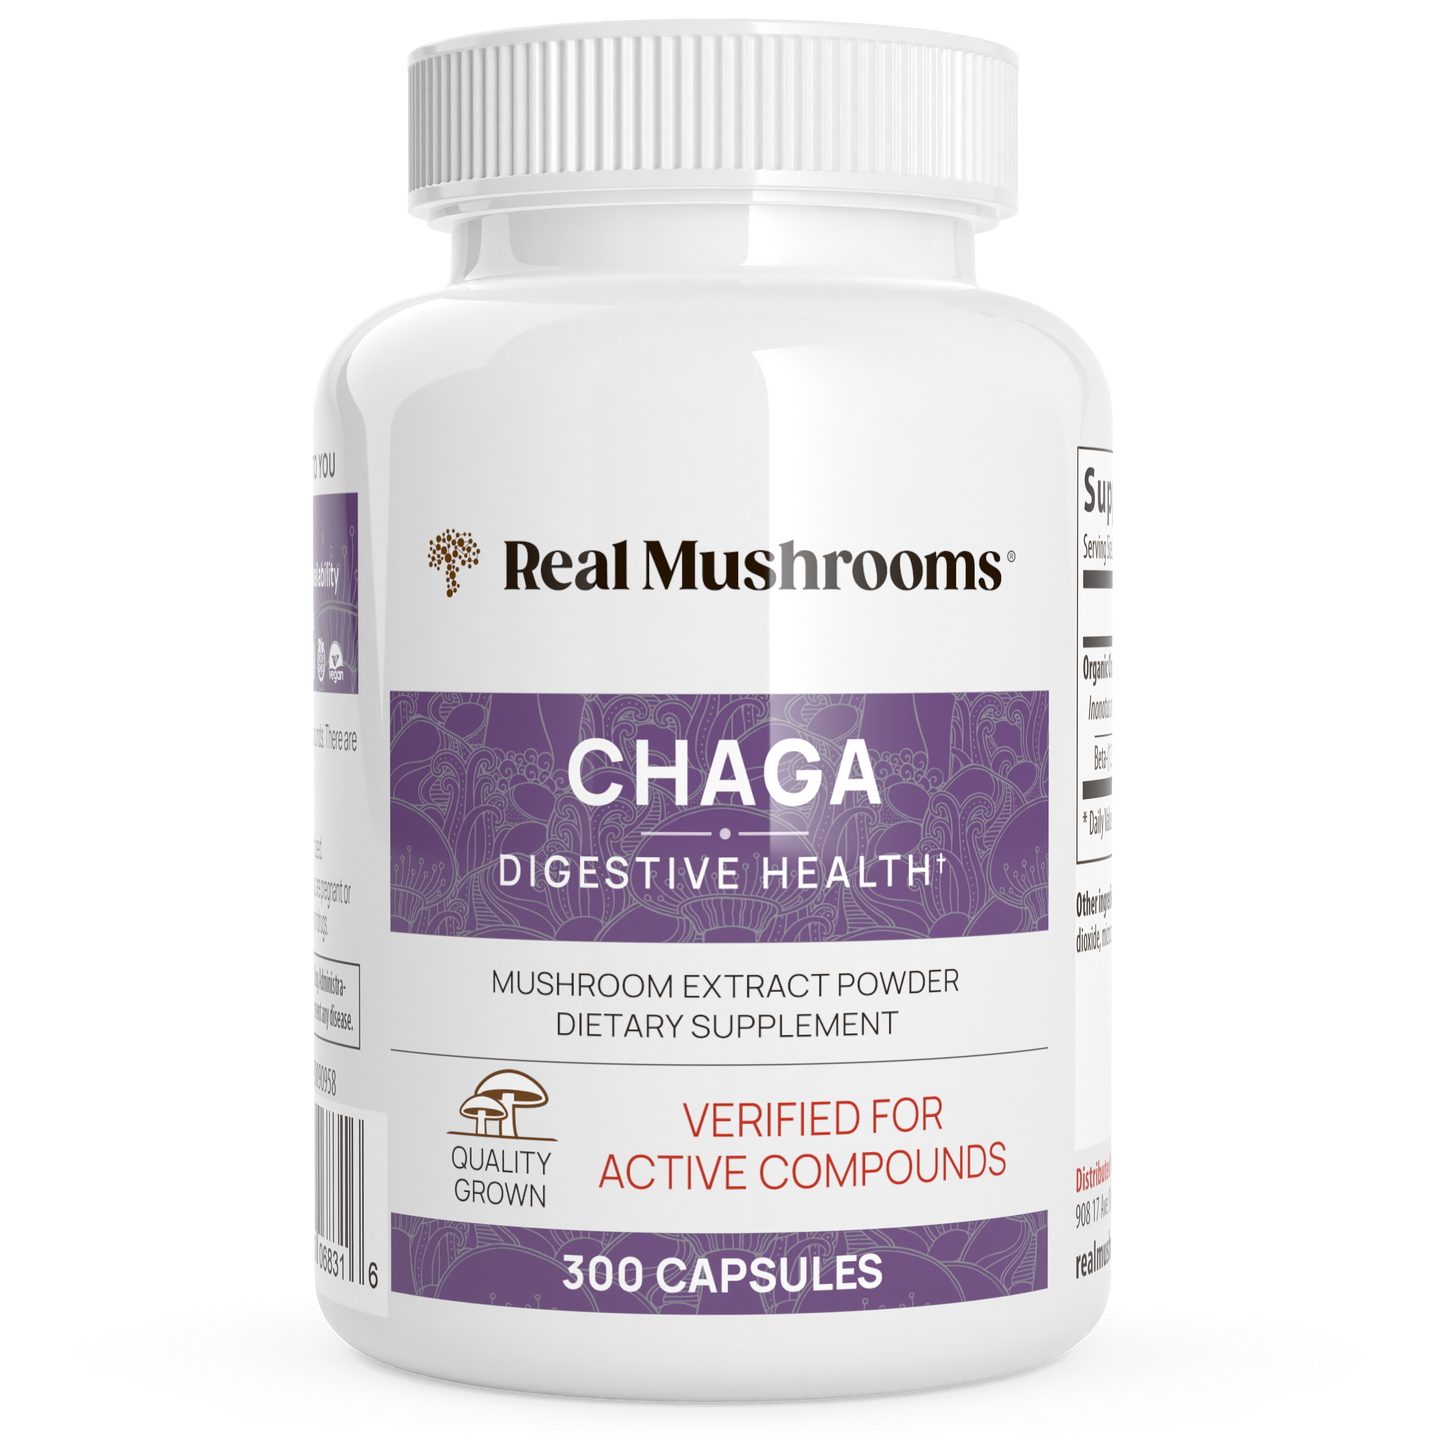 Organic Chaga Extract Capsules by Real Mushrooms